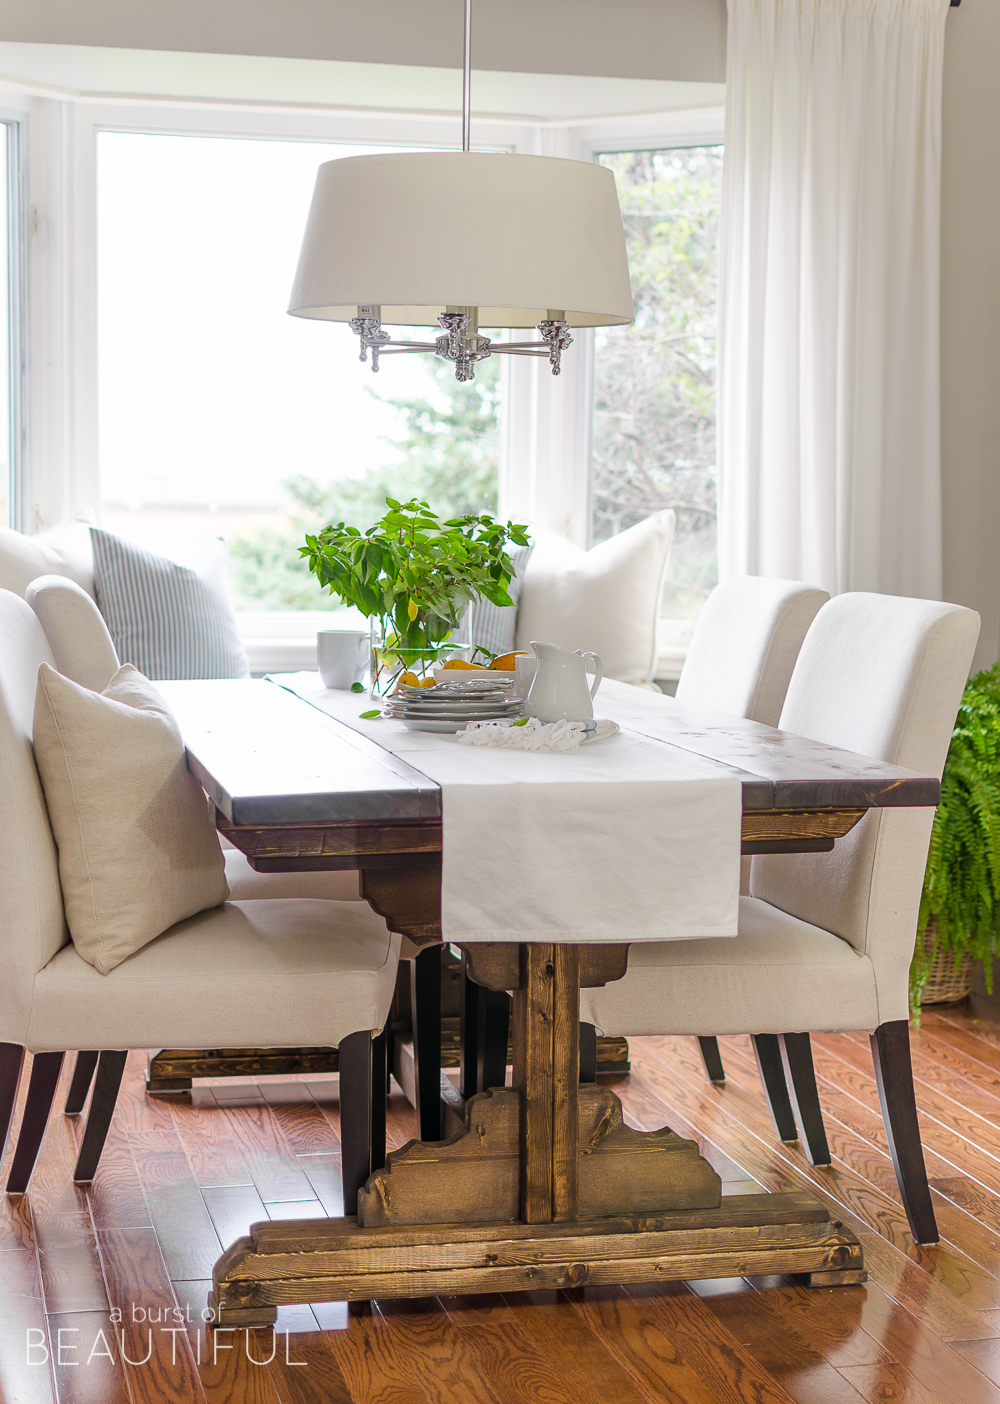 DIY Farmhouse Dining Table Plans A Burst Of Beautiful